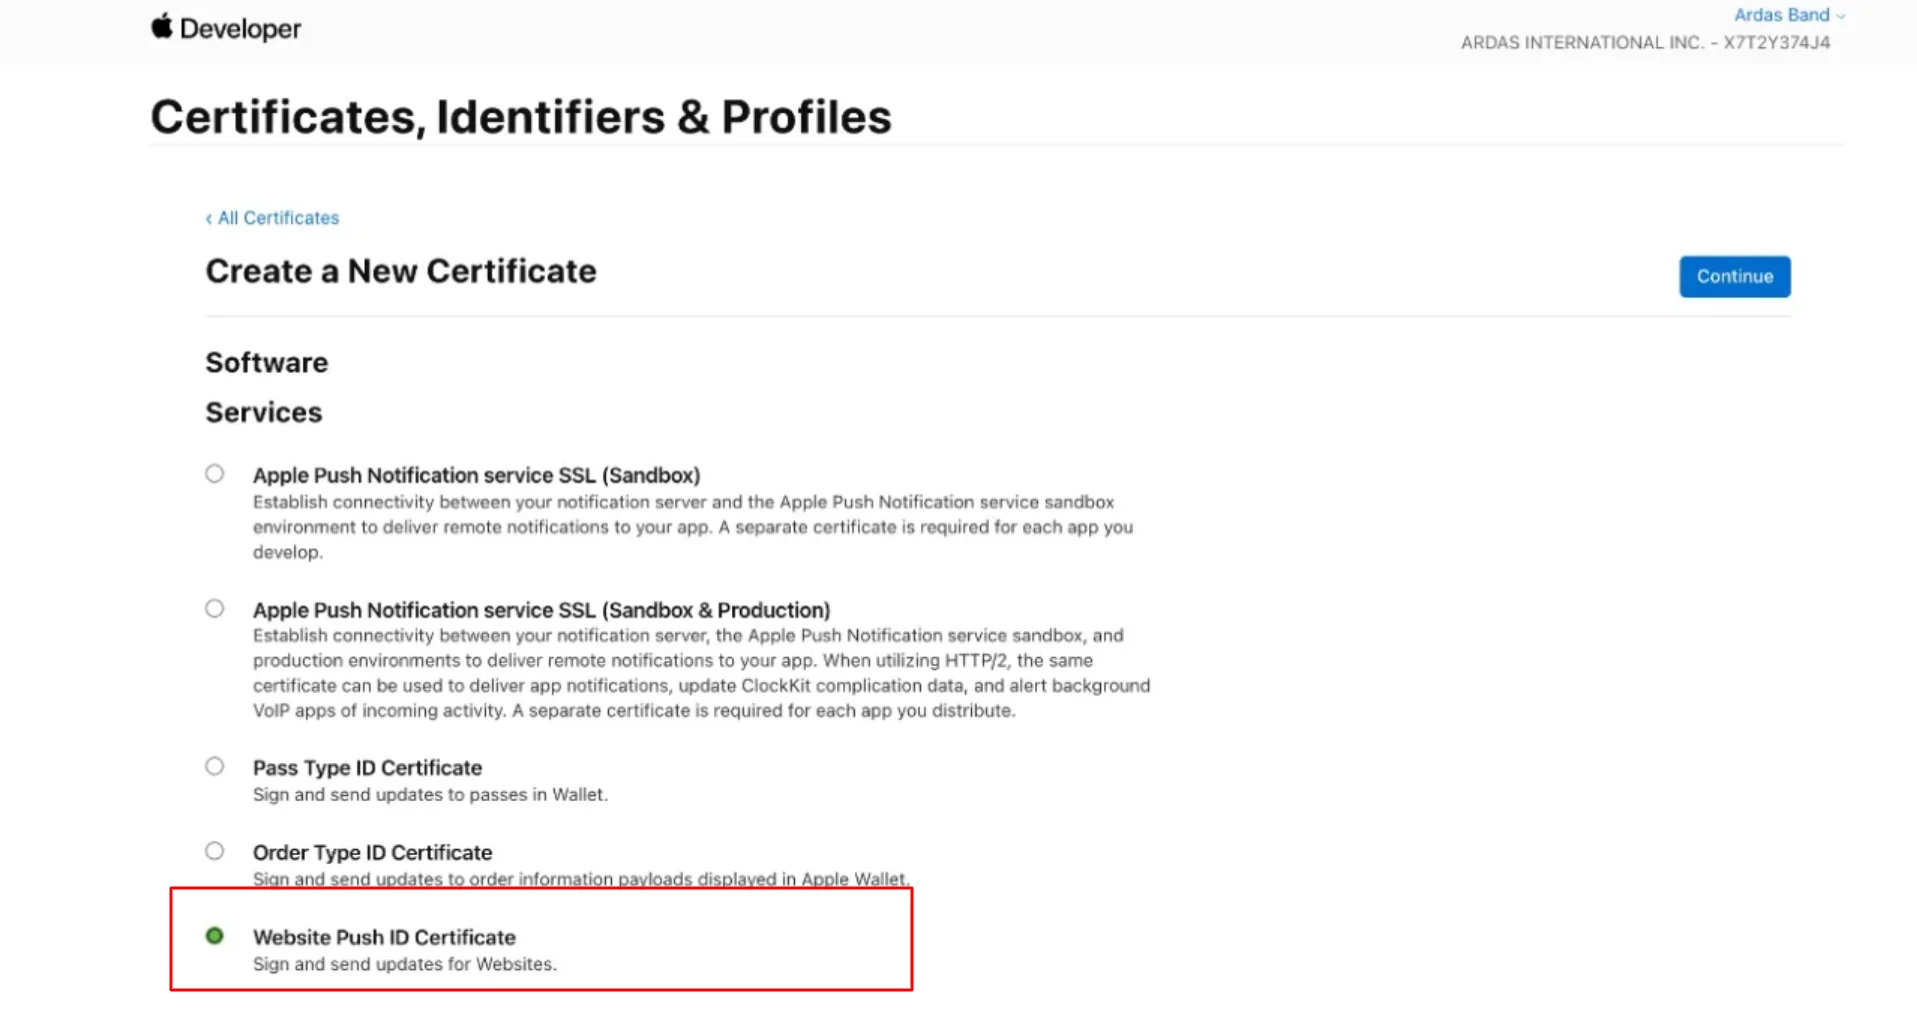 Website push ID certificate